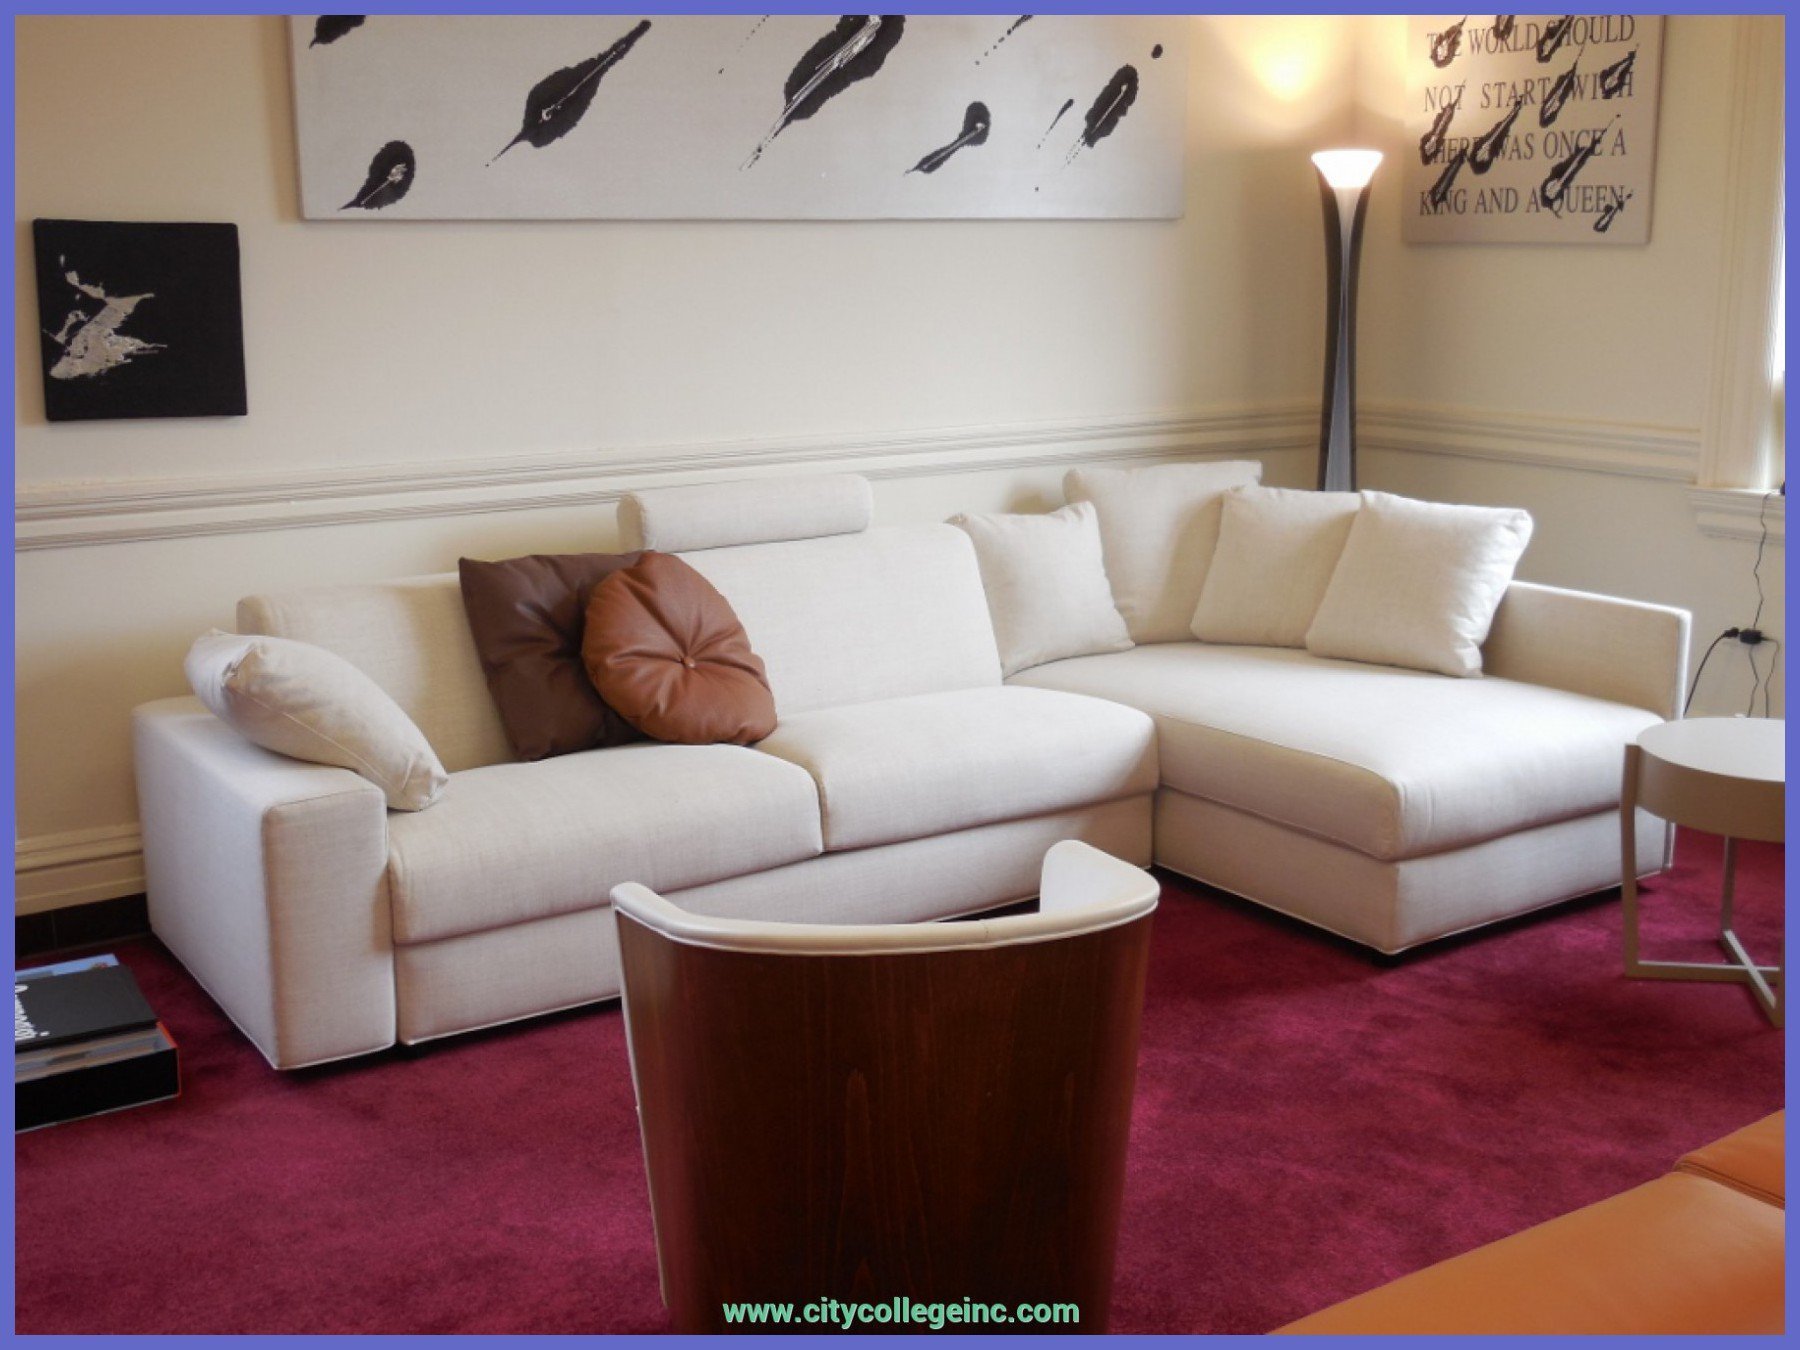 Фото углового дивана в зале. Диван в интерьере. Красивые угловые диваны в интерьере. Ковер с угловым диваном в интерьере. Угловой диван в интерьере гостиной.